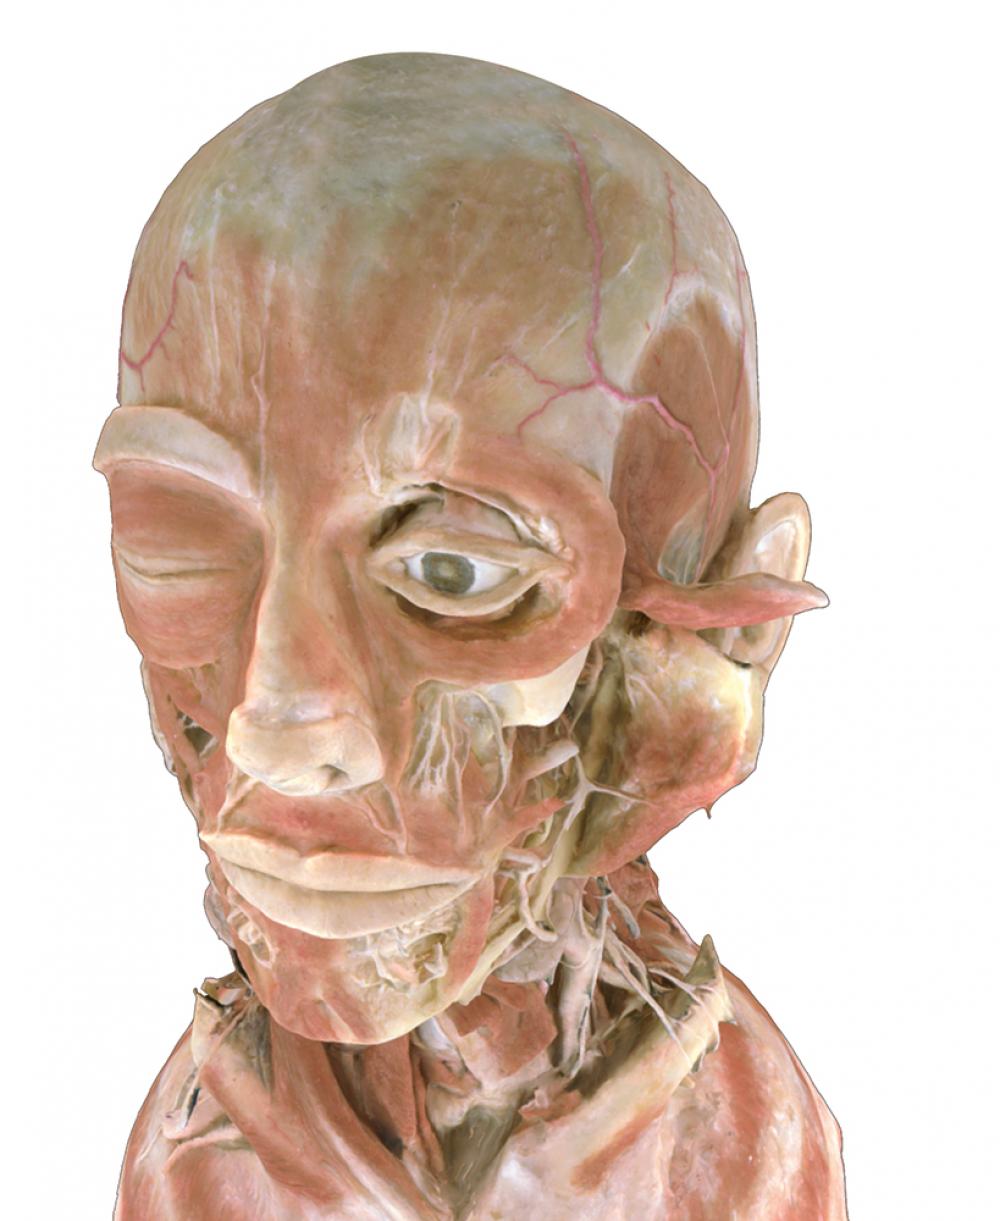 Head of Plastinated Cadaver